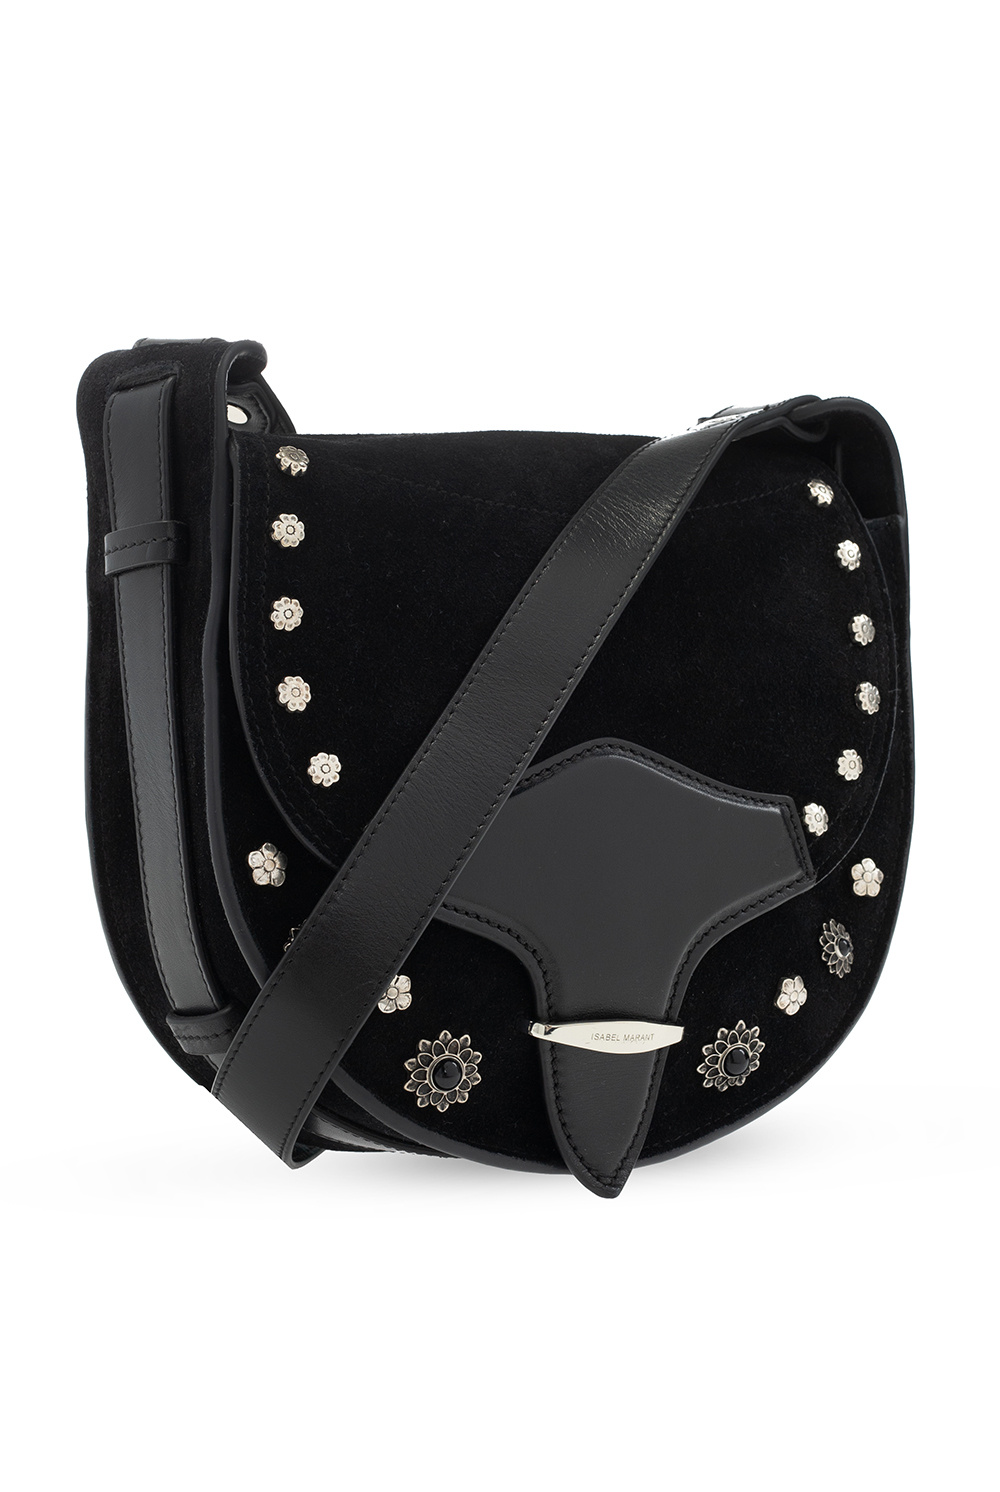 Isabel Marant mirror-detail mini bag Black